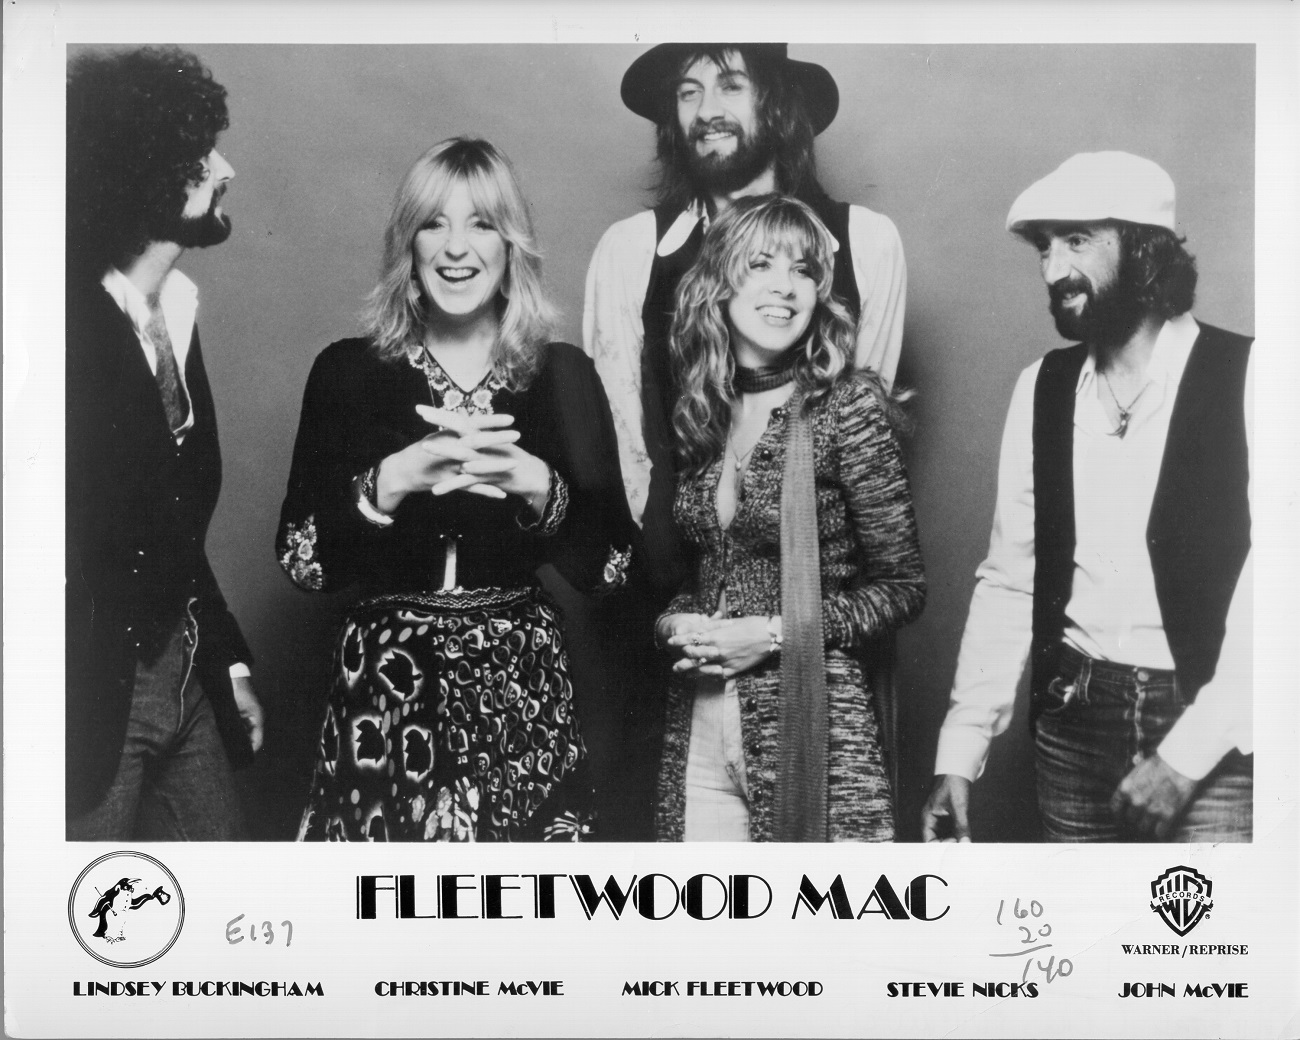 A black and white photo of the members of Fleetwood Mac, Lindsey Buckingham, Christine McVie, Mick Fleetwood, Stevie Nicks, and John McVie.